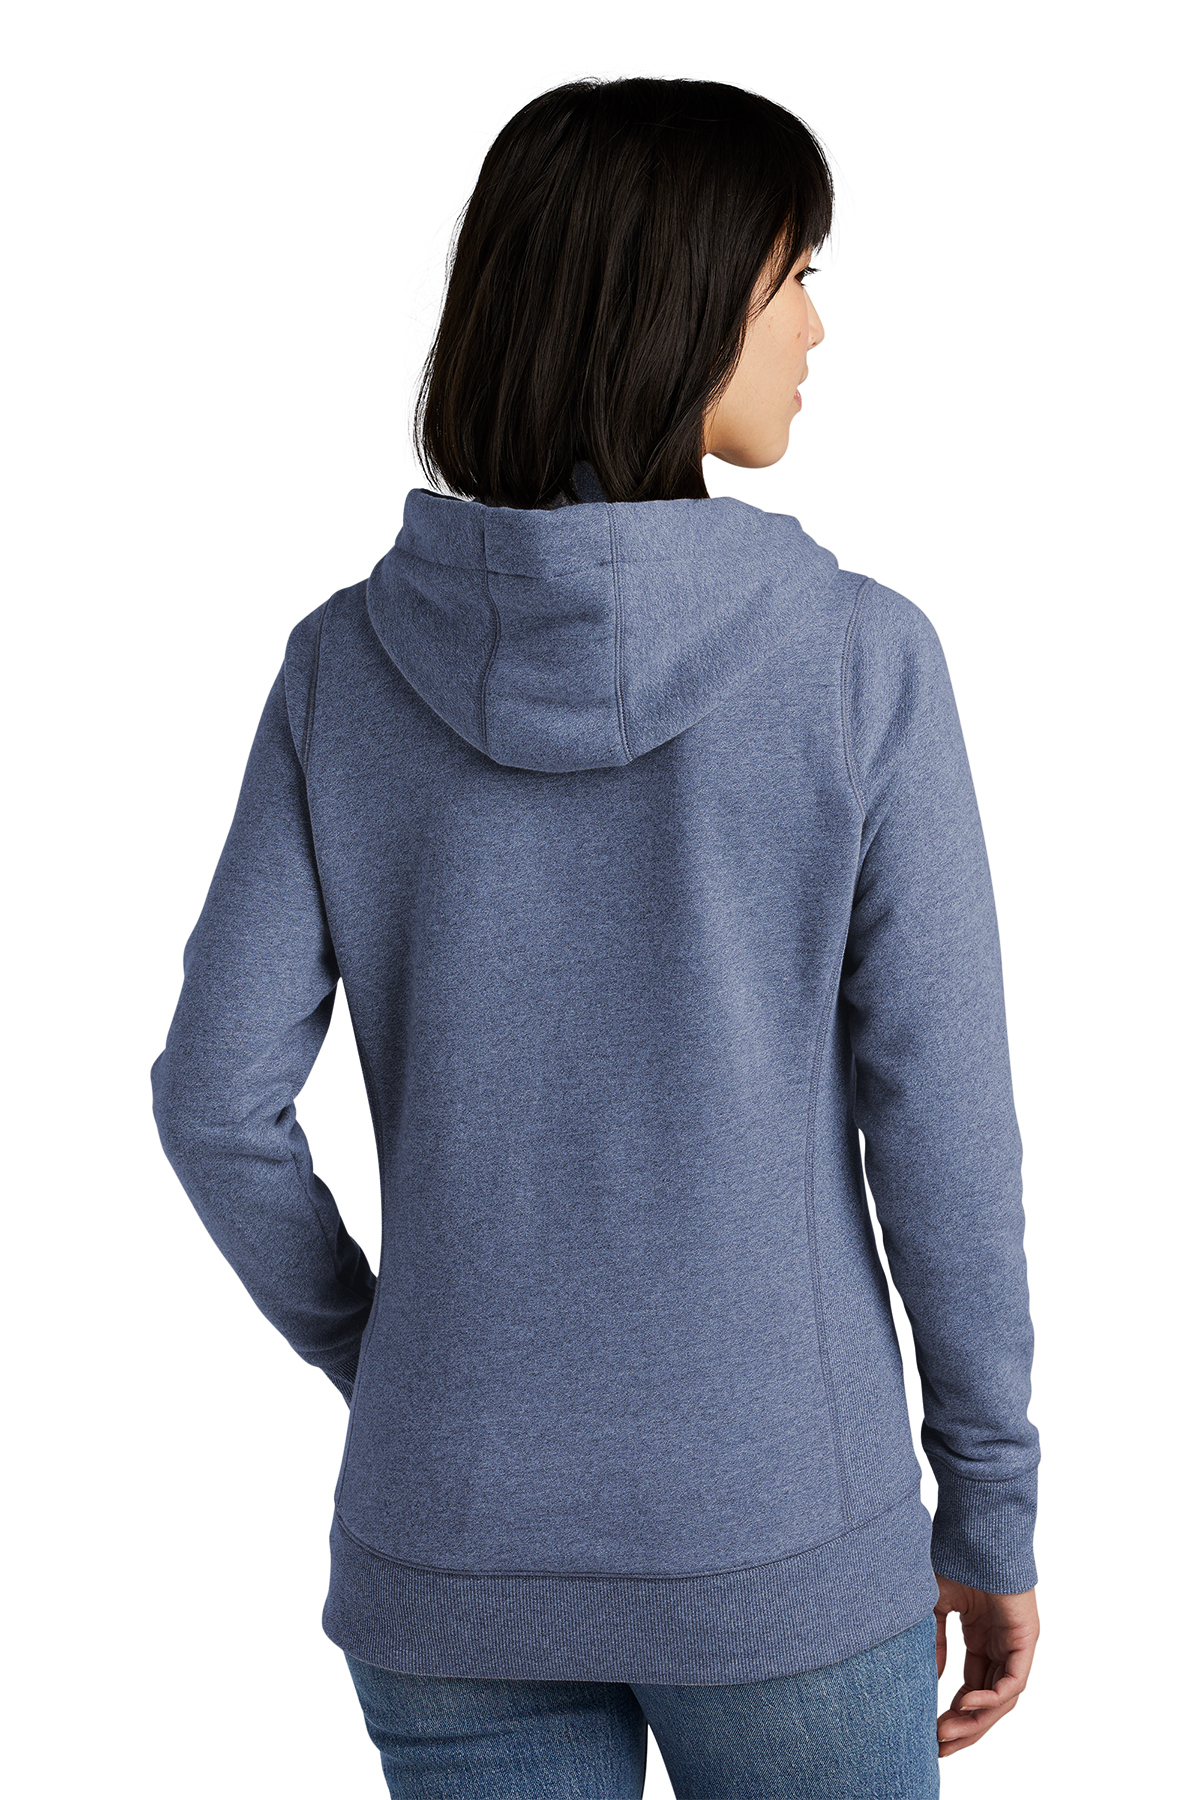 New Era Detroit Tigers Womens Navy Blue Burnout Wash Hooded Sweatshirt